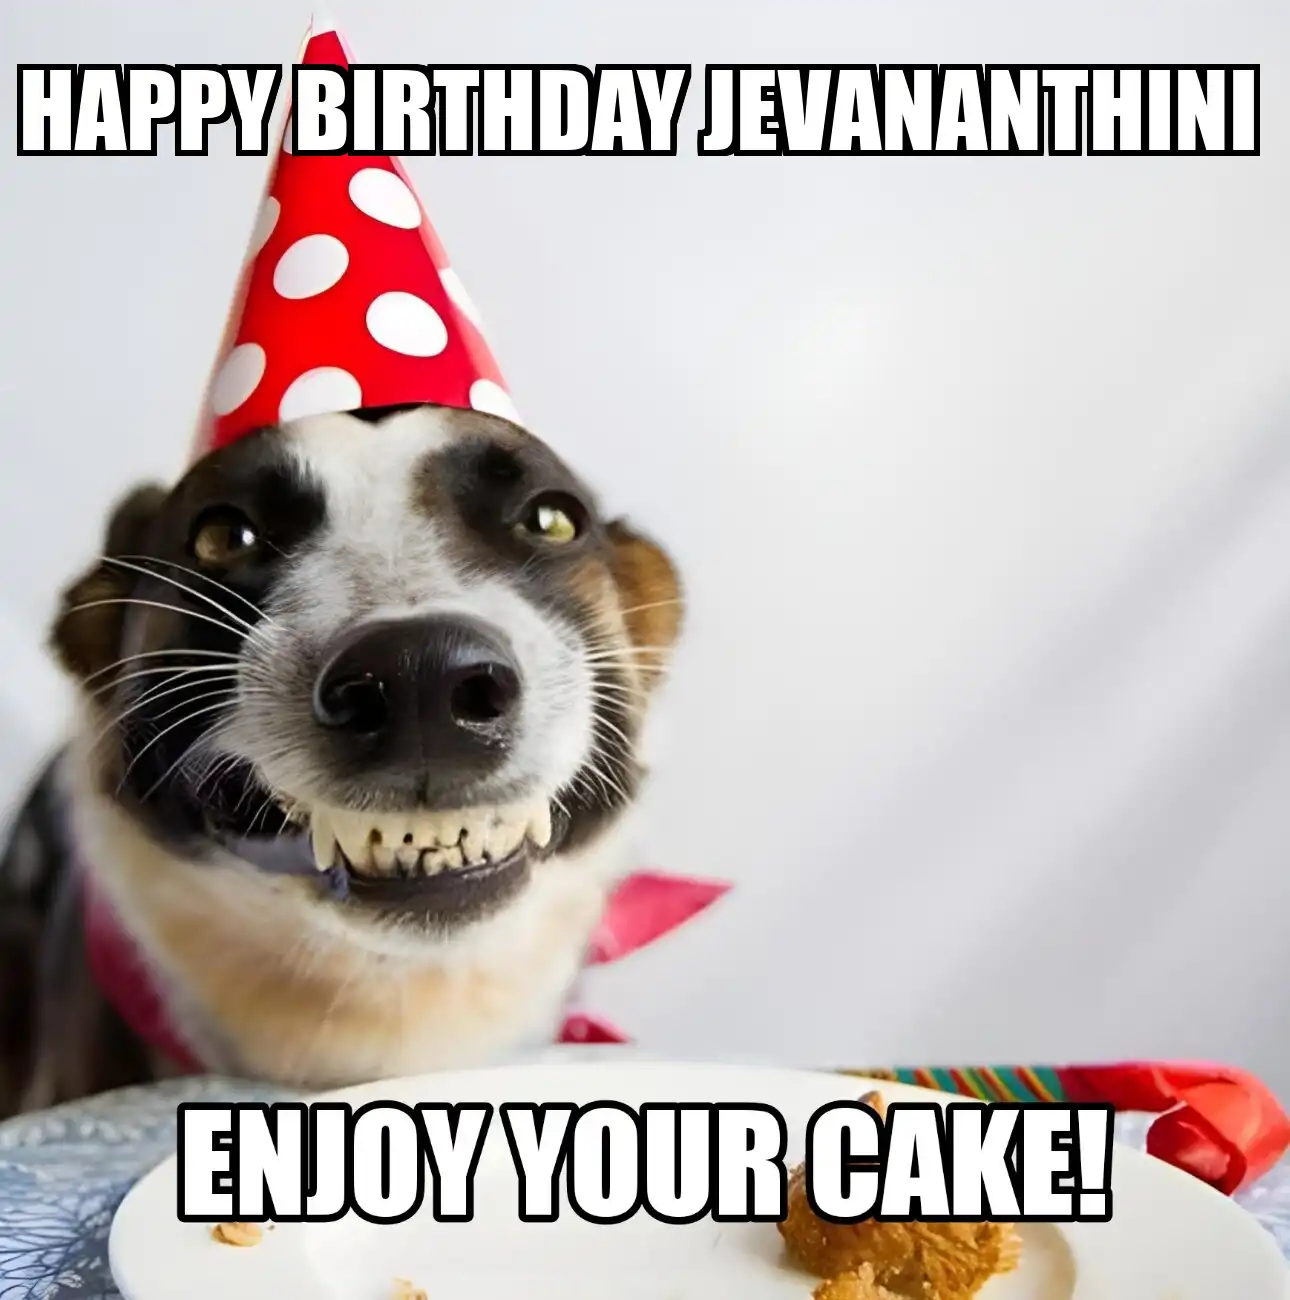 Happy Birthday Jevananthini Enjoy Your Cake Dog Meme